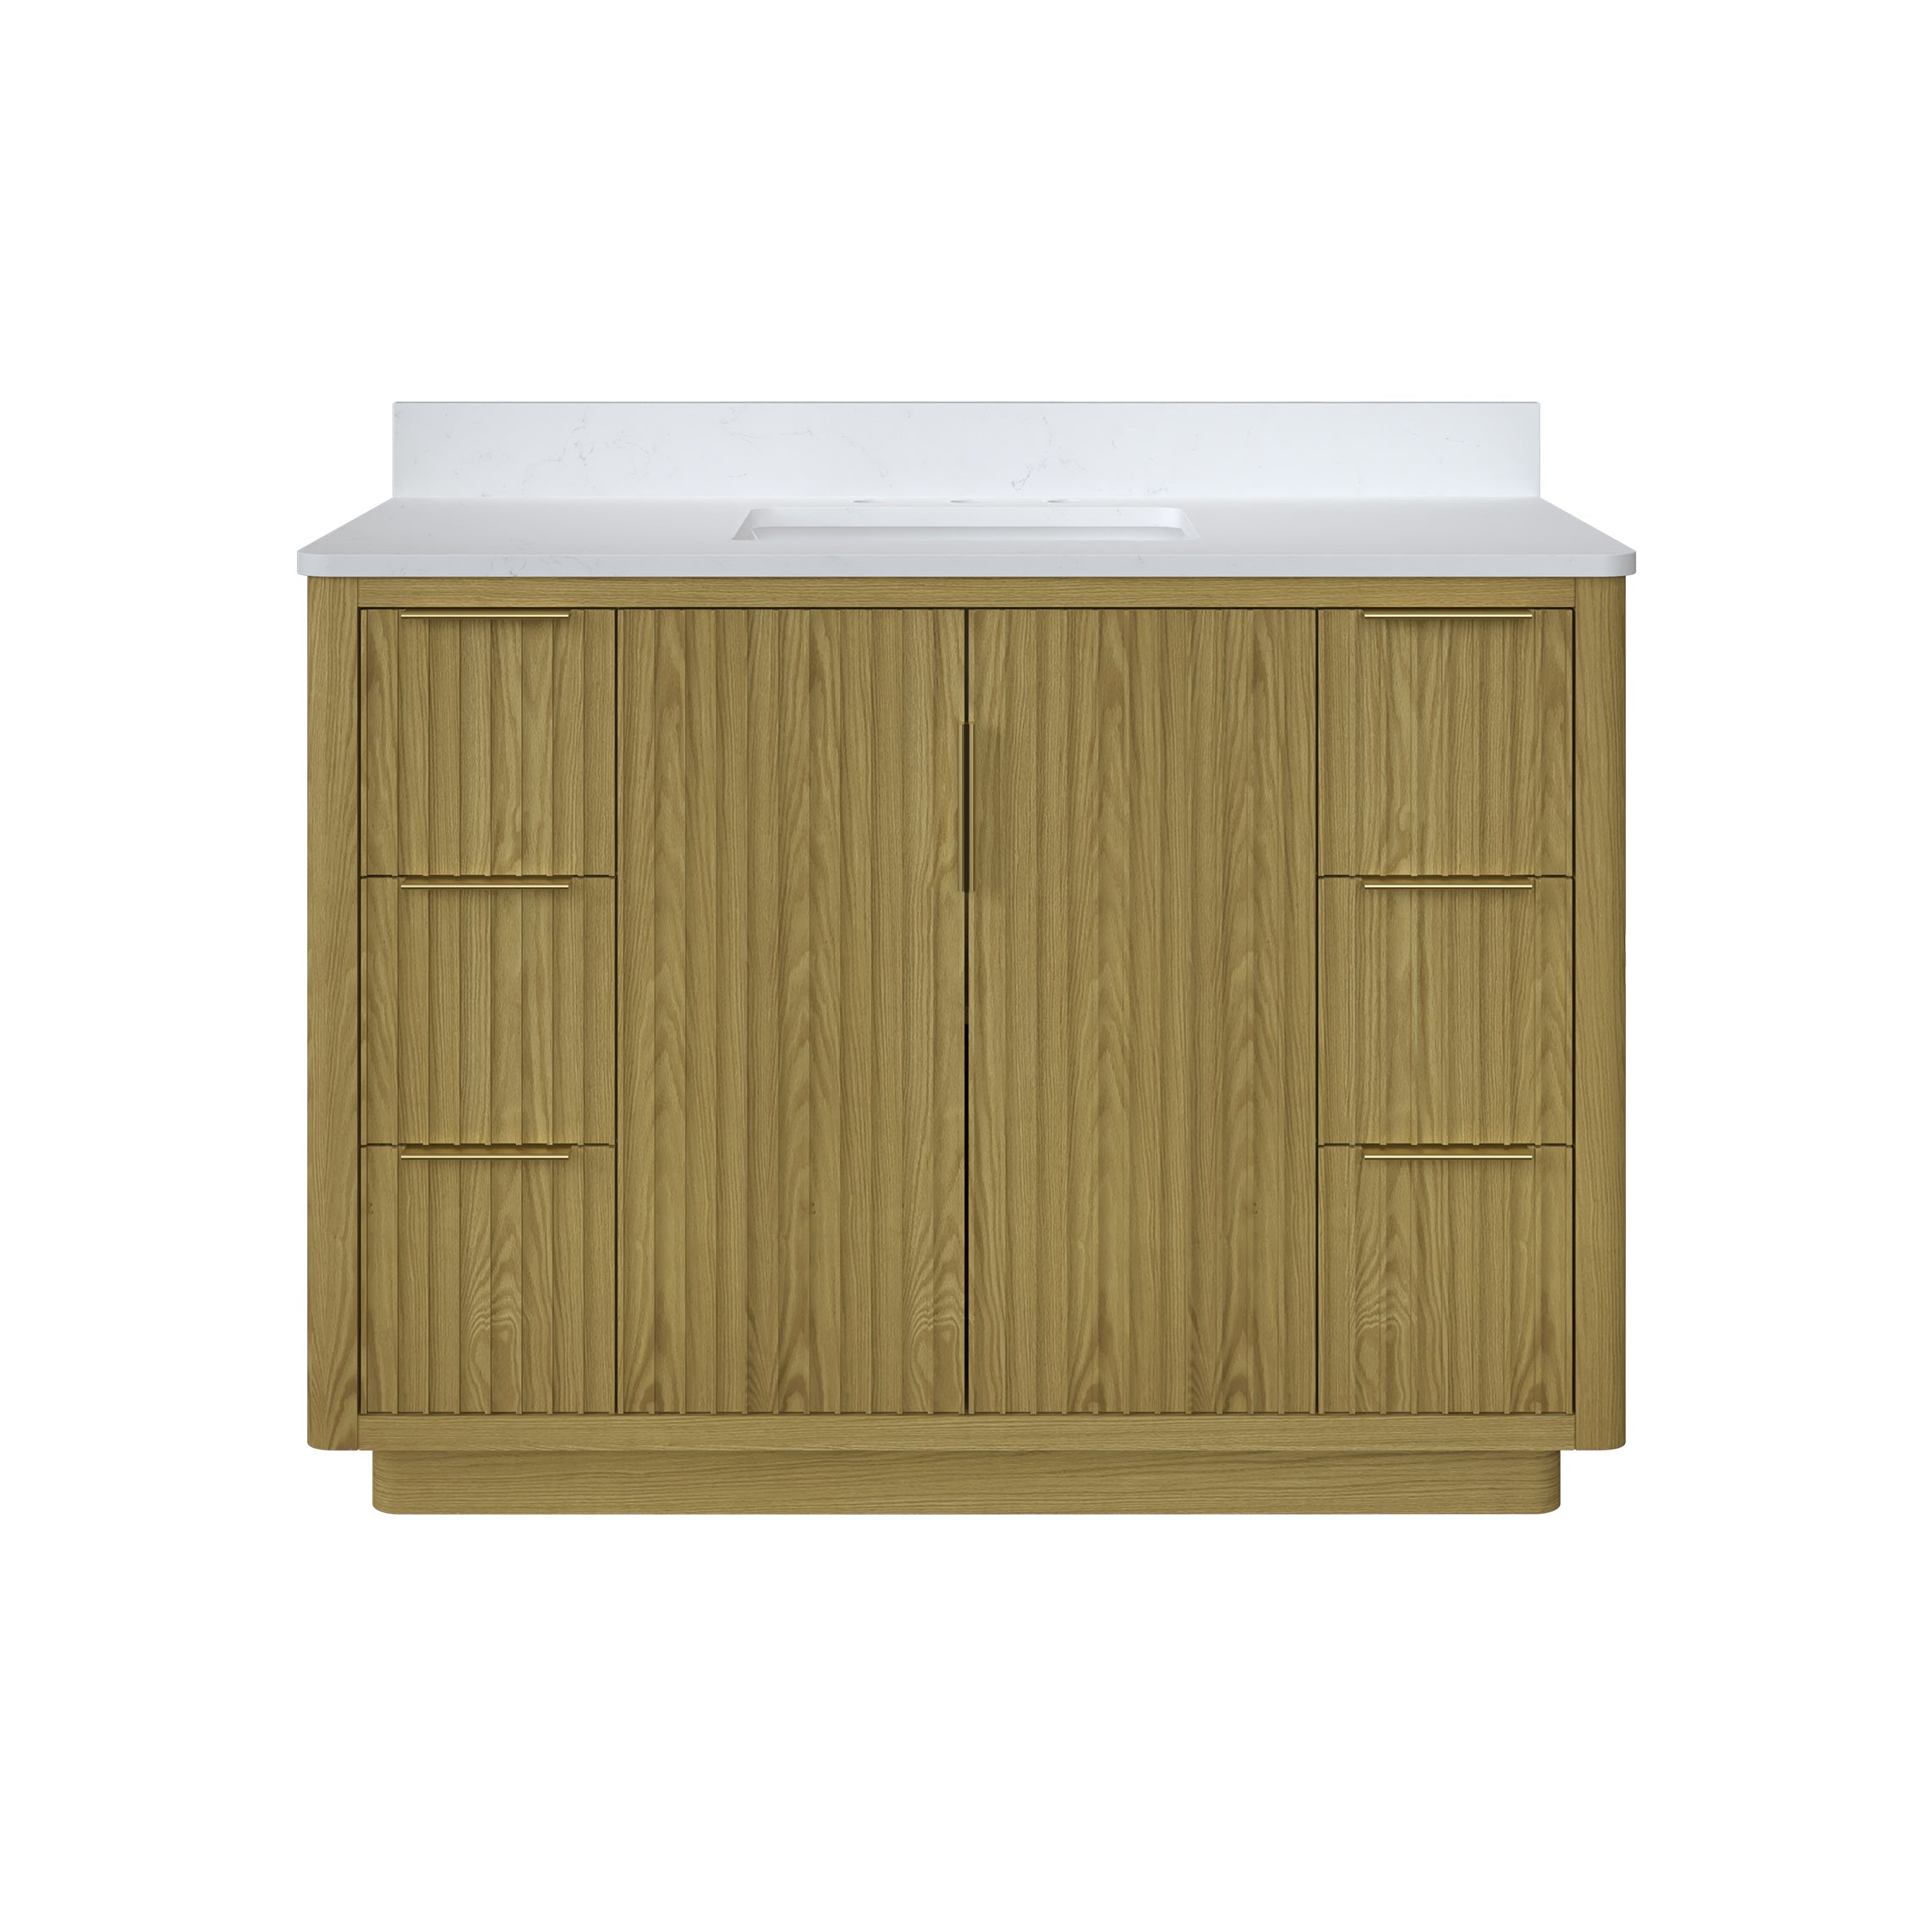 48 in. Oak Freestanding Solid Wood Bathroom Vanity with White Quartz Countertop